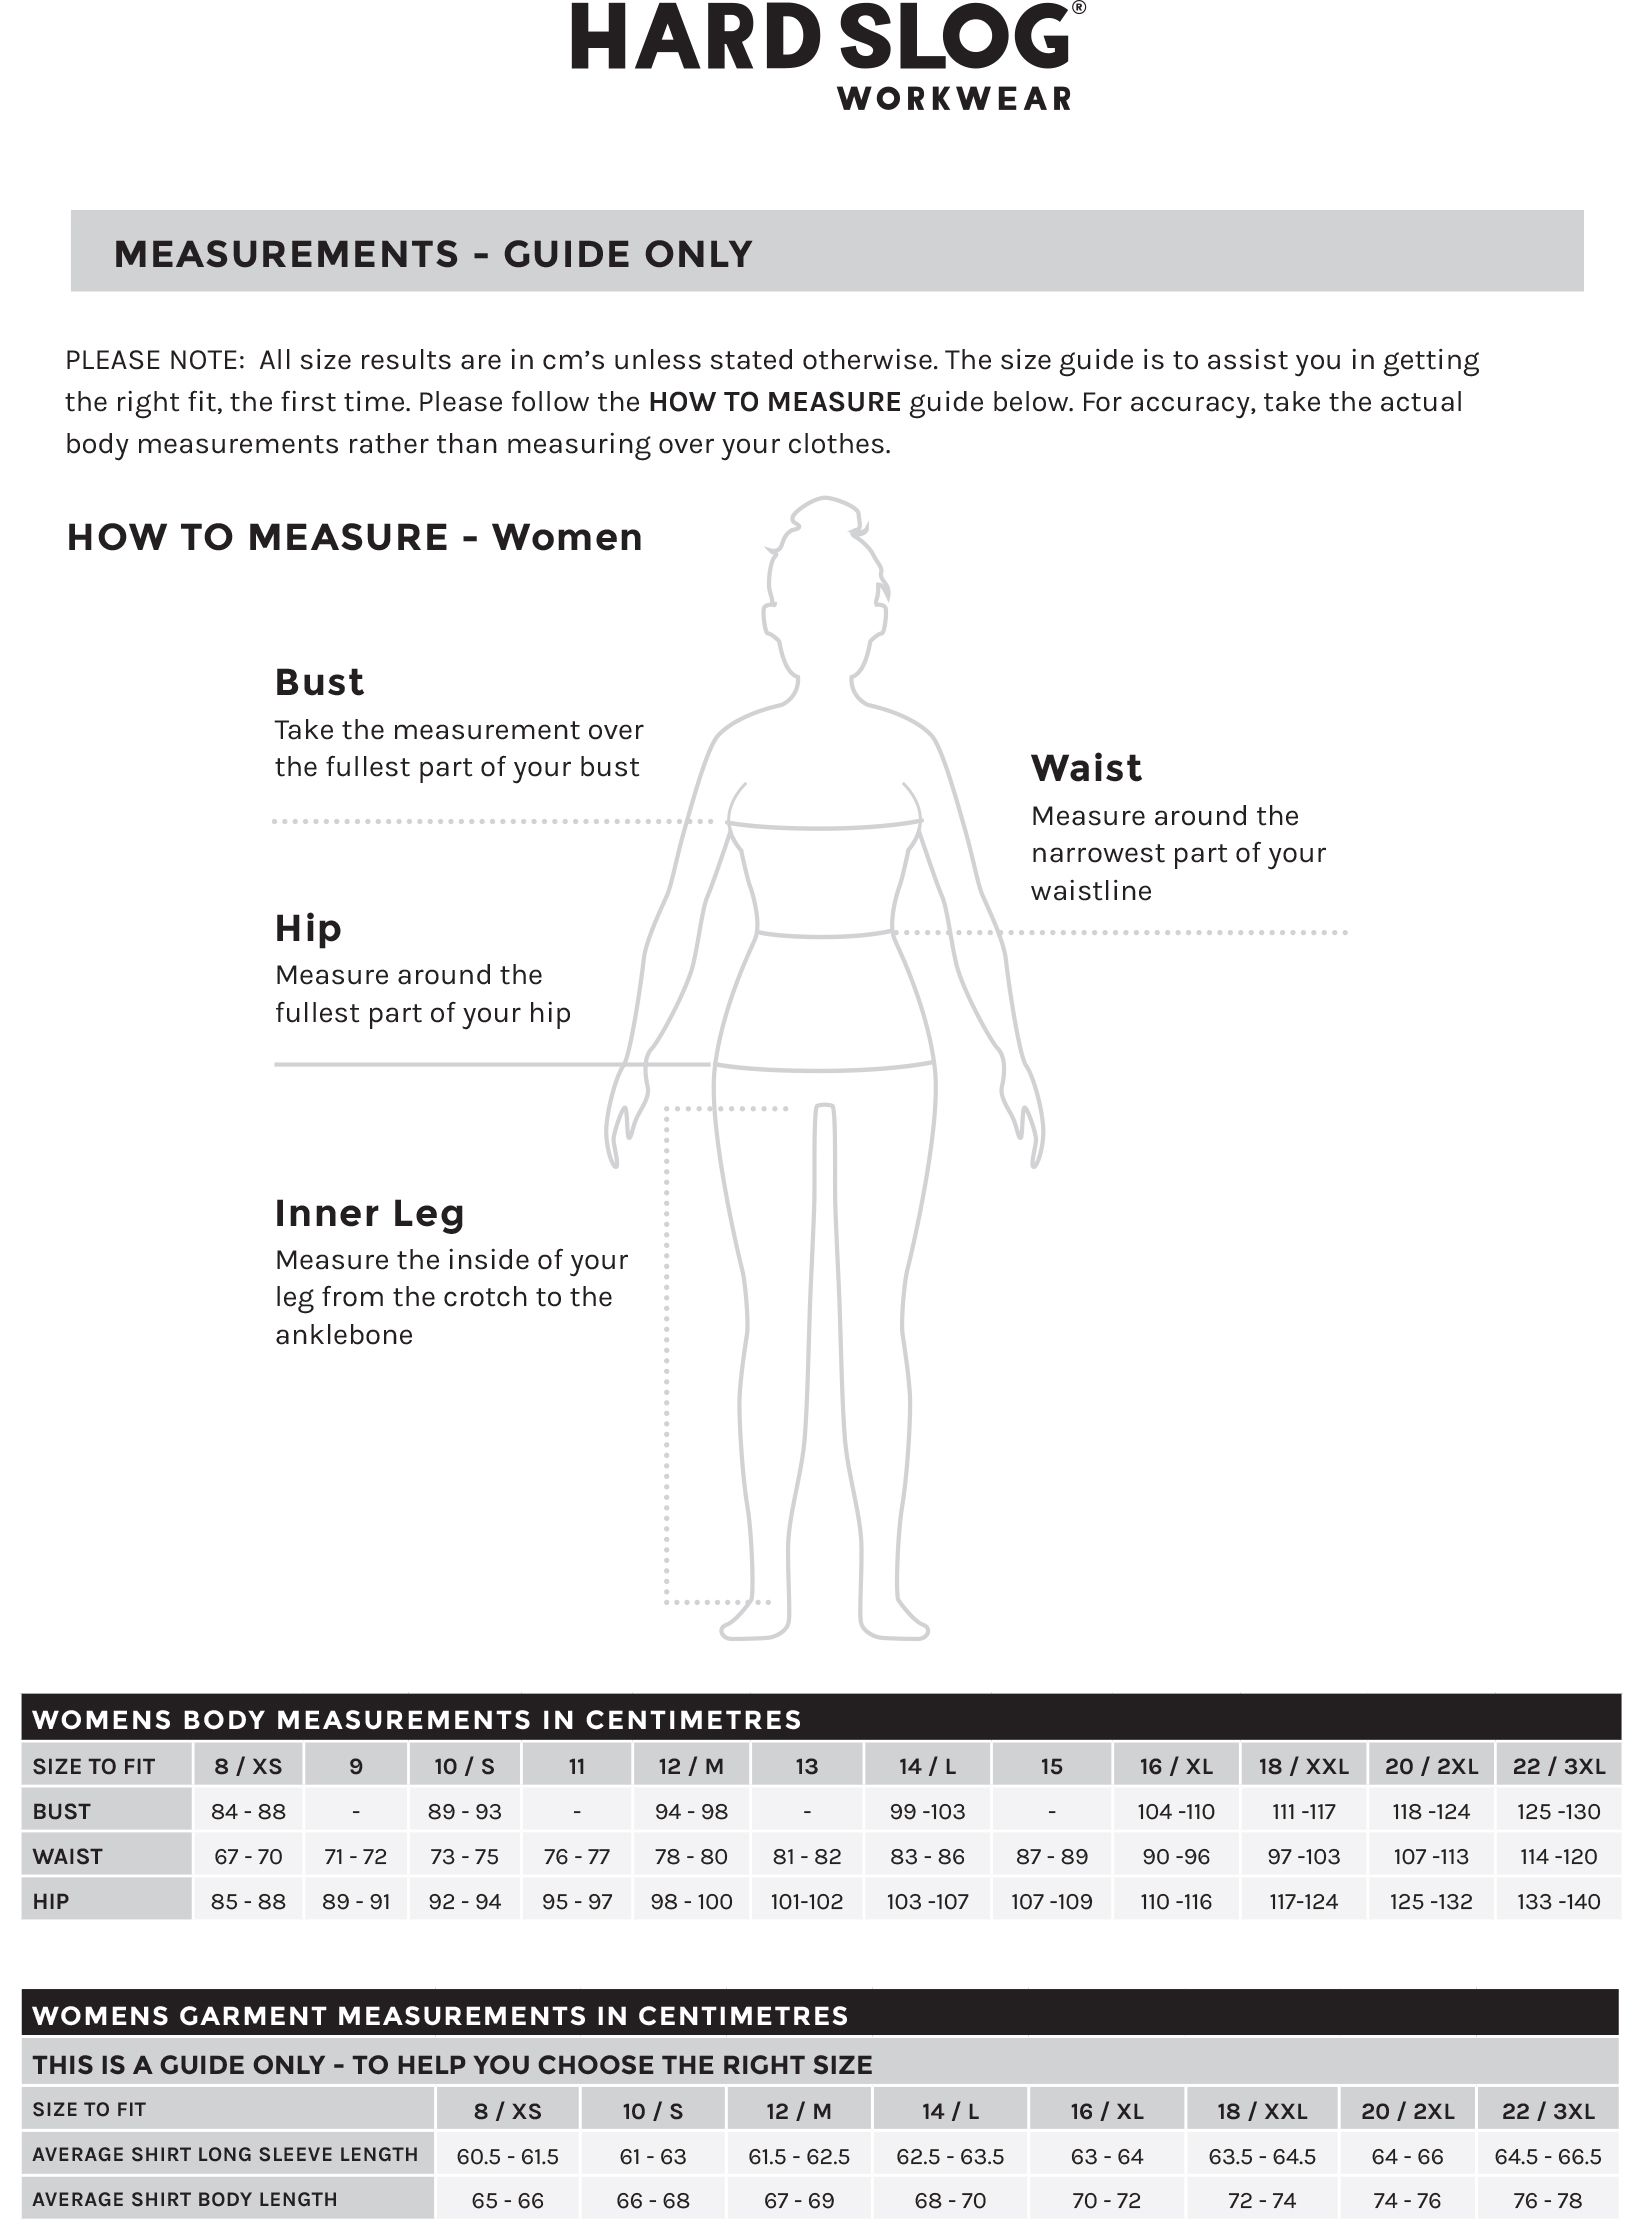 Hard Slog Womens Size Chart.jpg